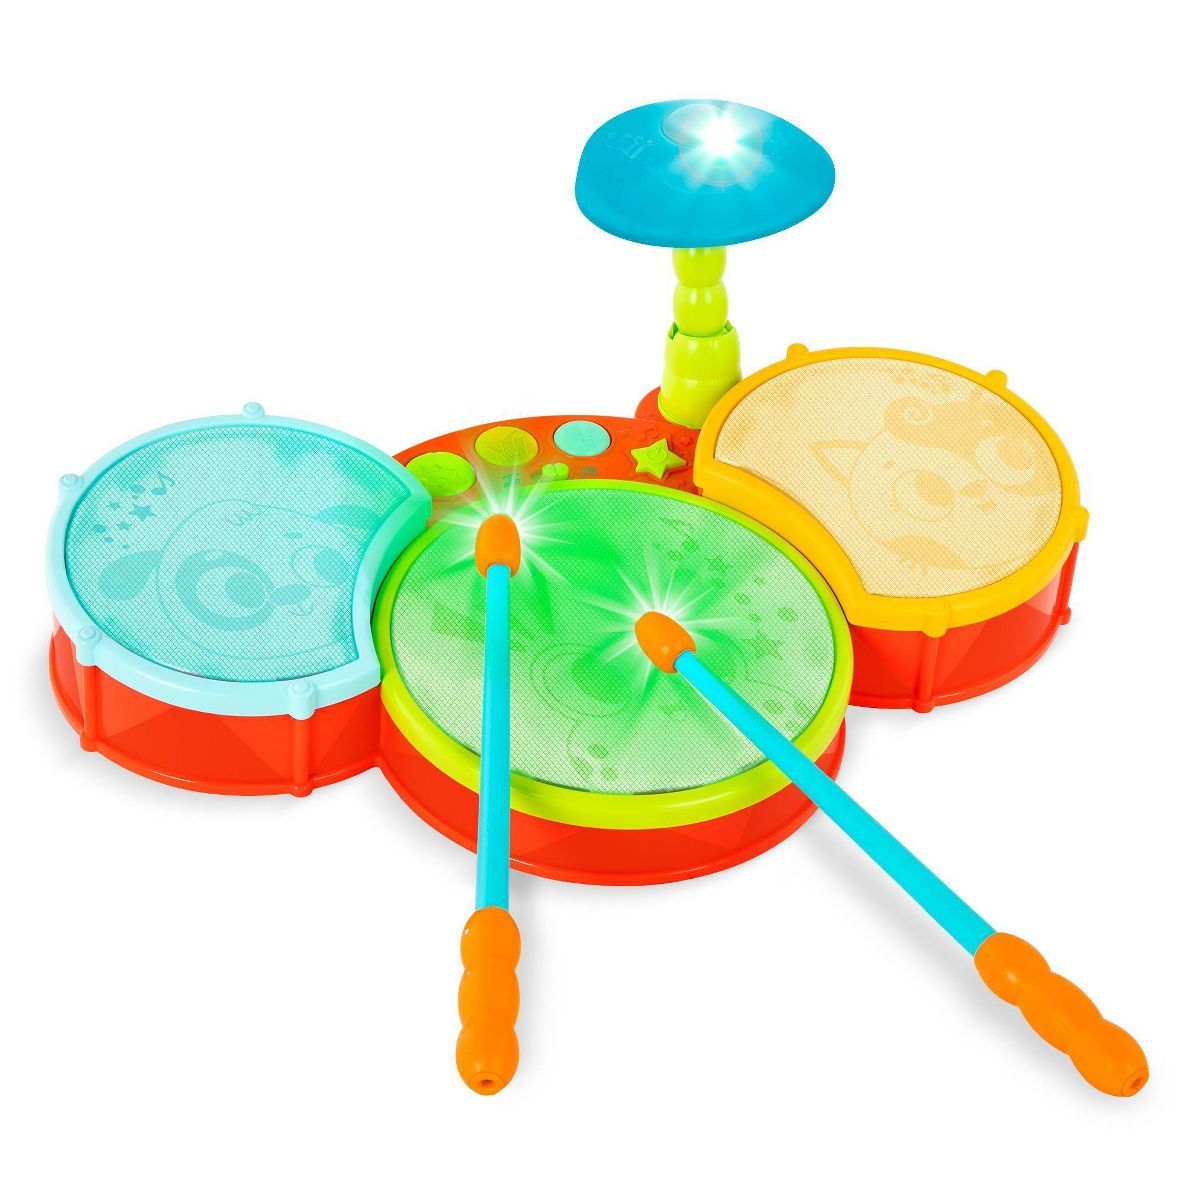 B. toys Toy Drum Set - Little Beats | Target